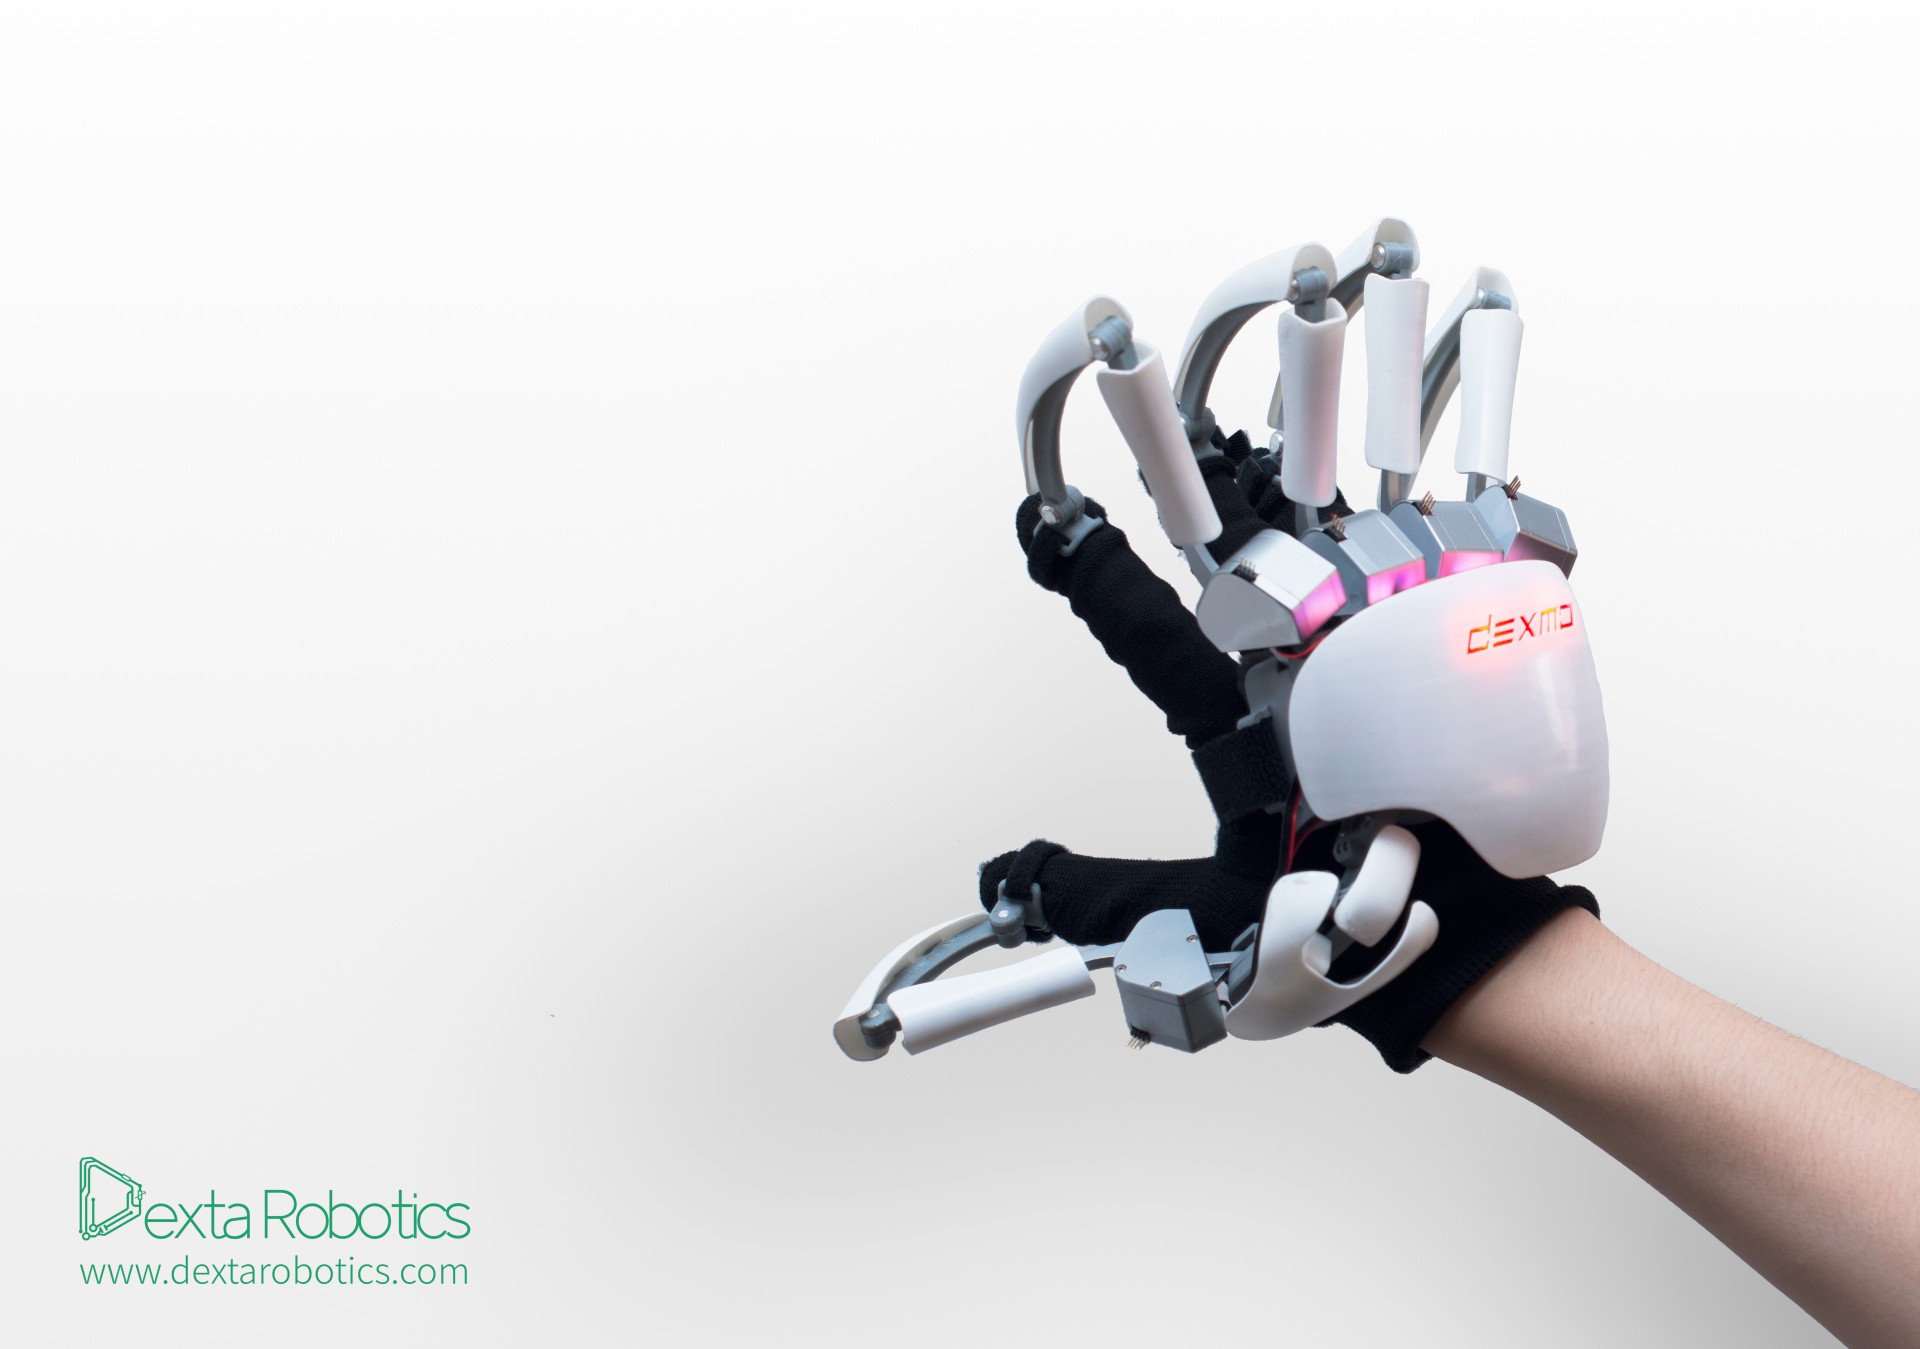 Mechanical Exoskeleton Glove For VR Use Being Developed Dexta Robotics - mxdwn Games